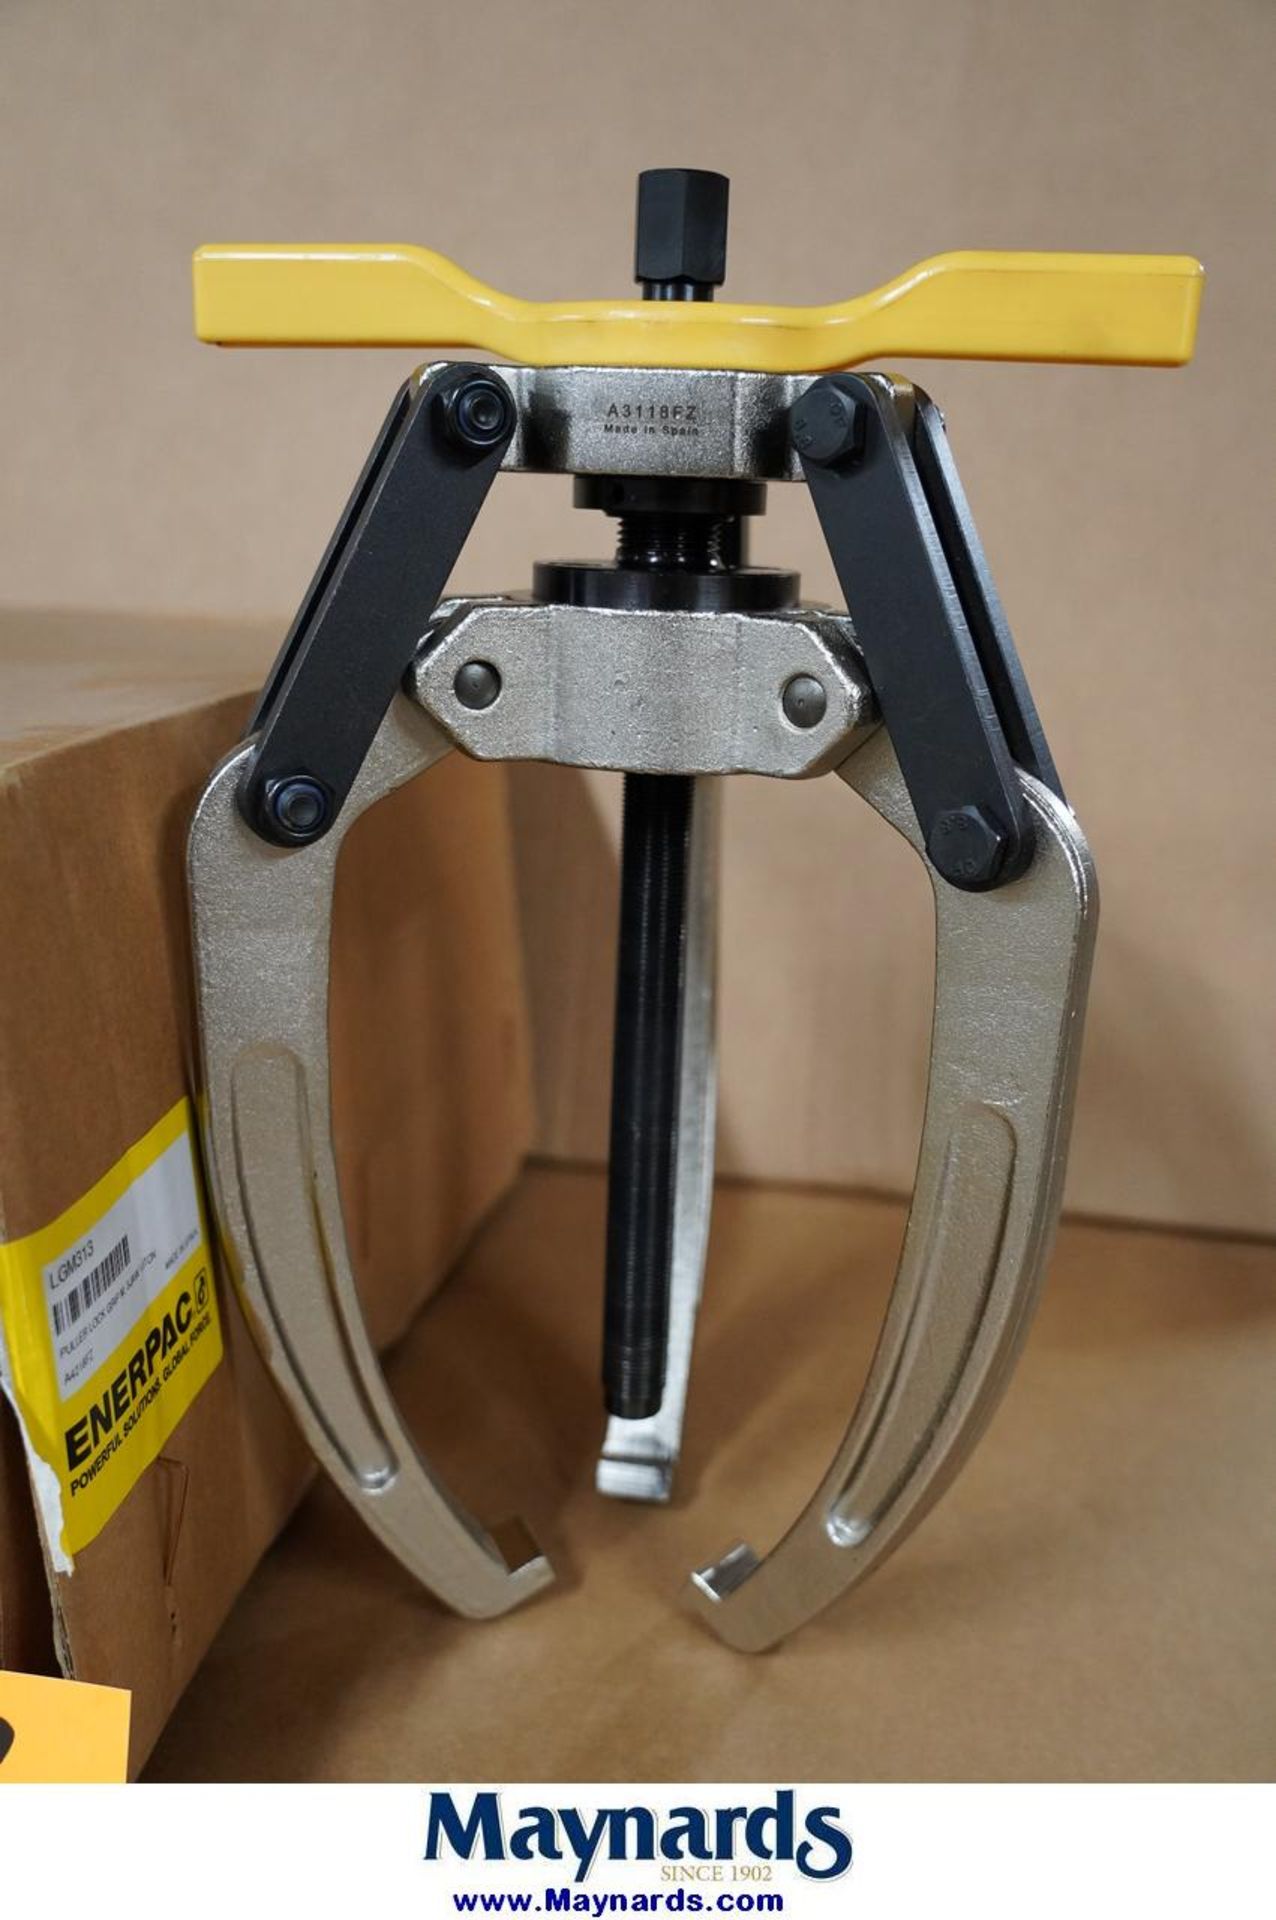 Enerpac LGM313 13 Ton 3 Jaw Mechanical Lock Grip Puller - Image 2 of 3